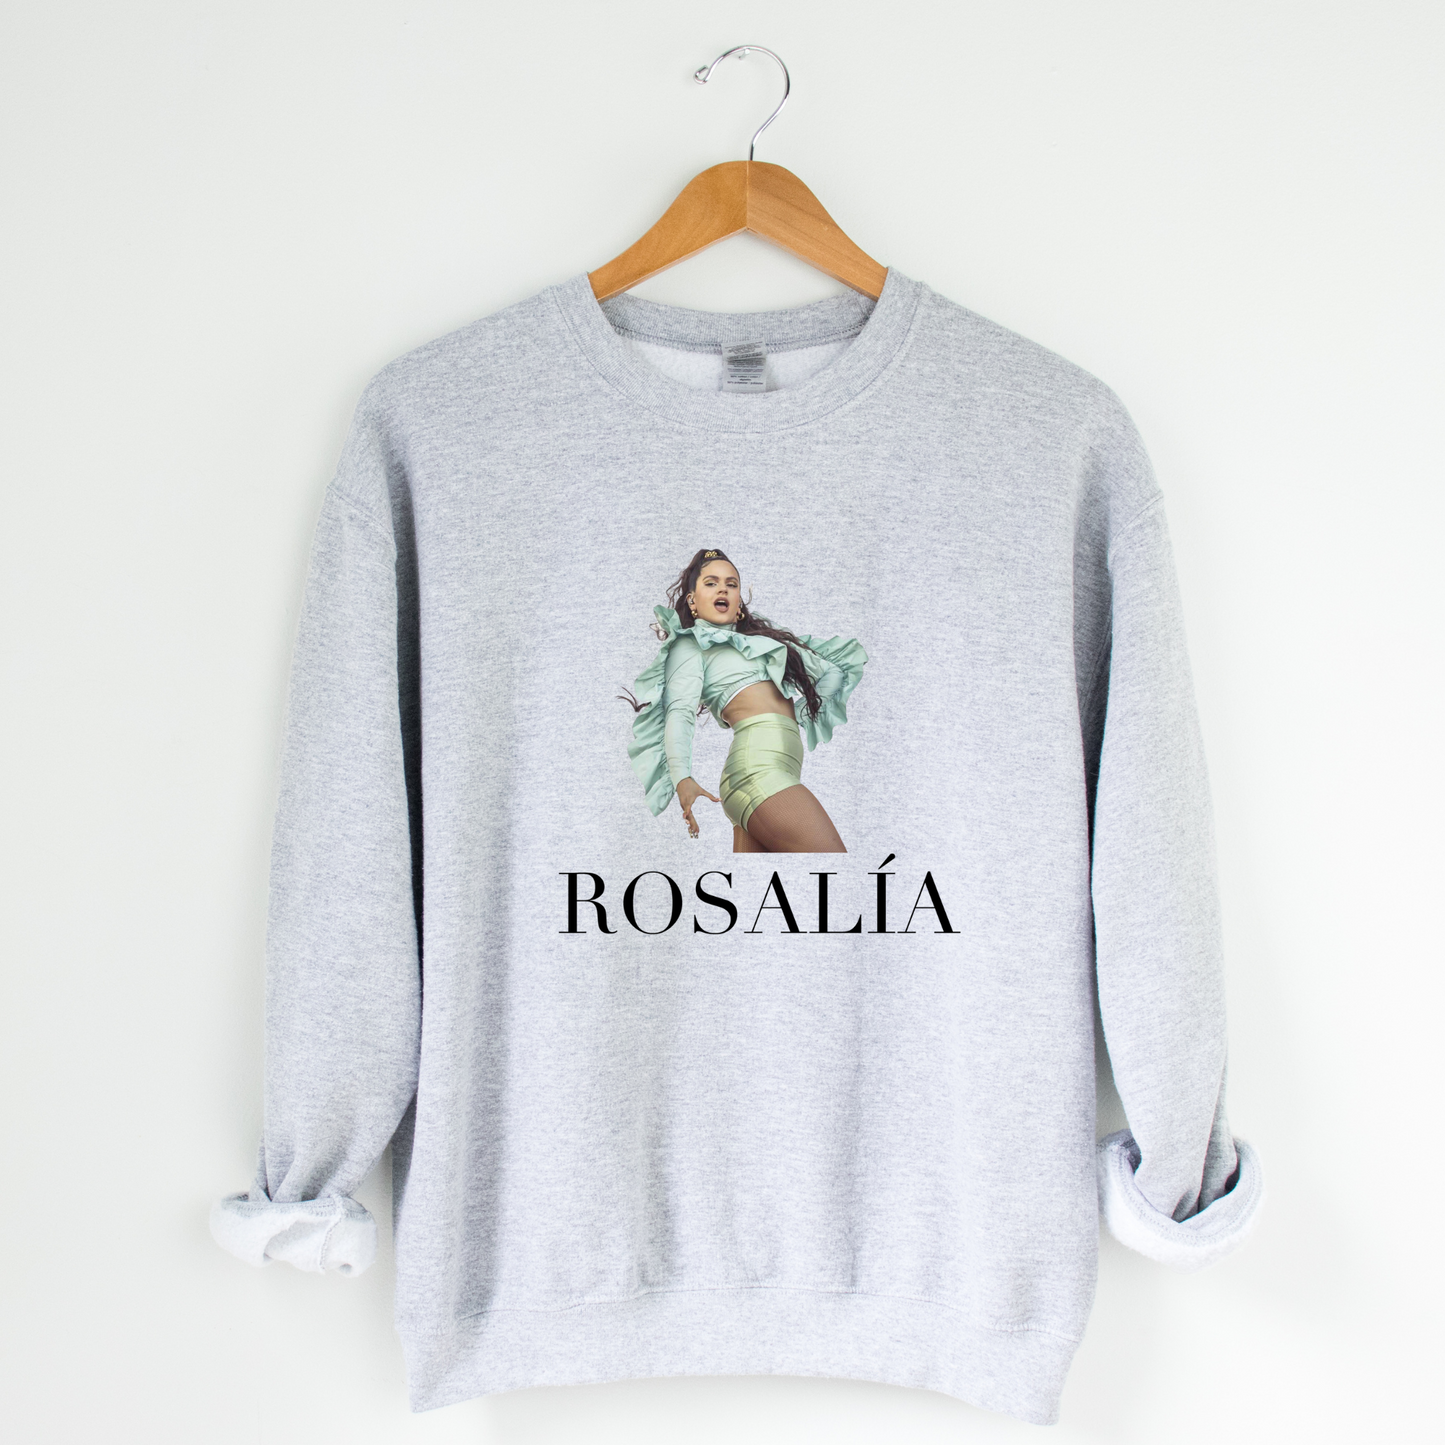 Rosalia Crew Neck Graphic Sweater